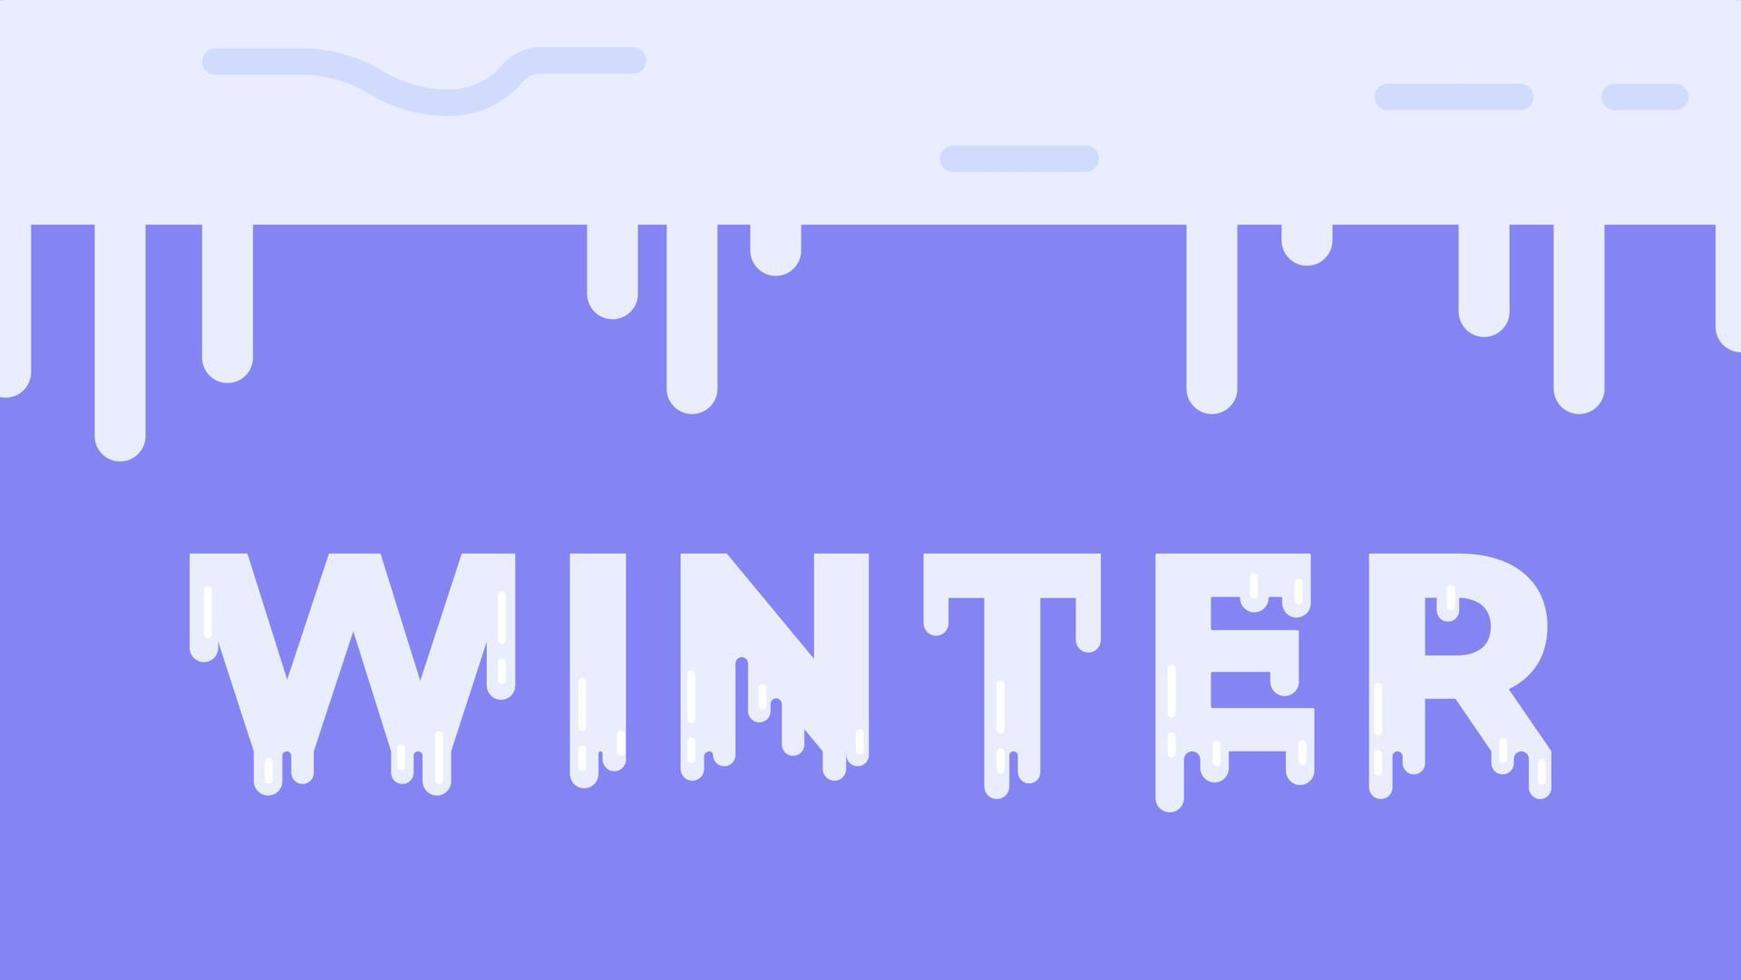 vektor illustration av kall, istapp brev på blå bakgrund. de ord vinter.